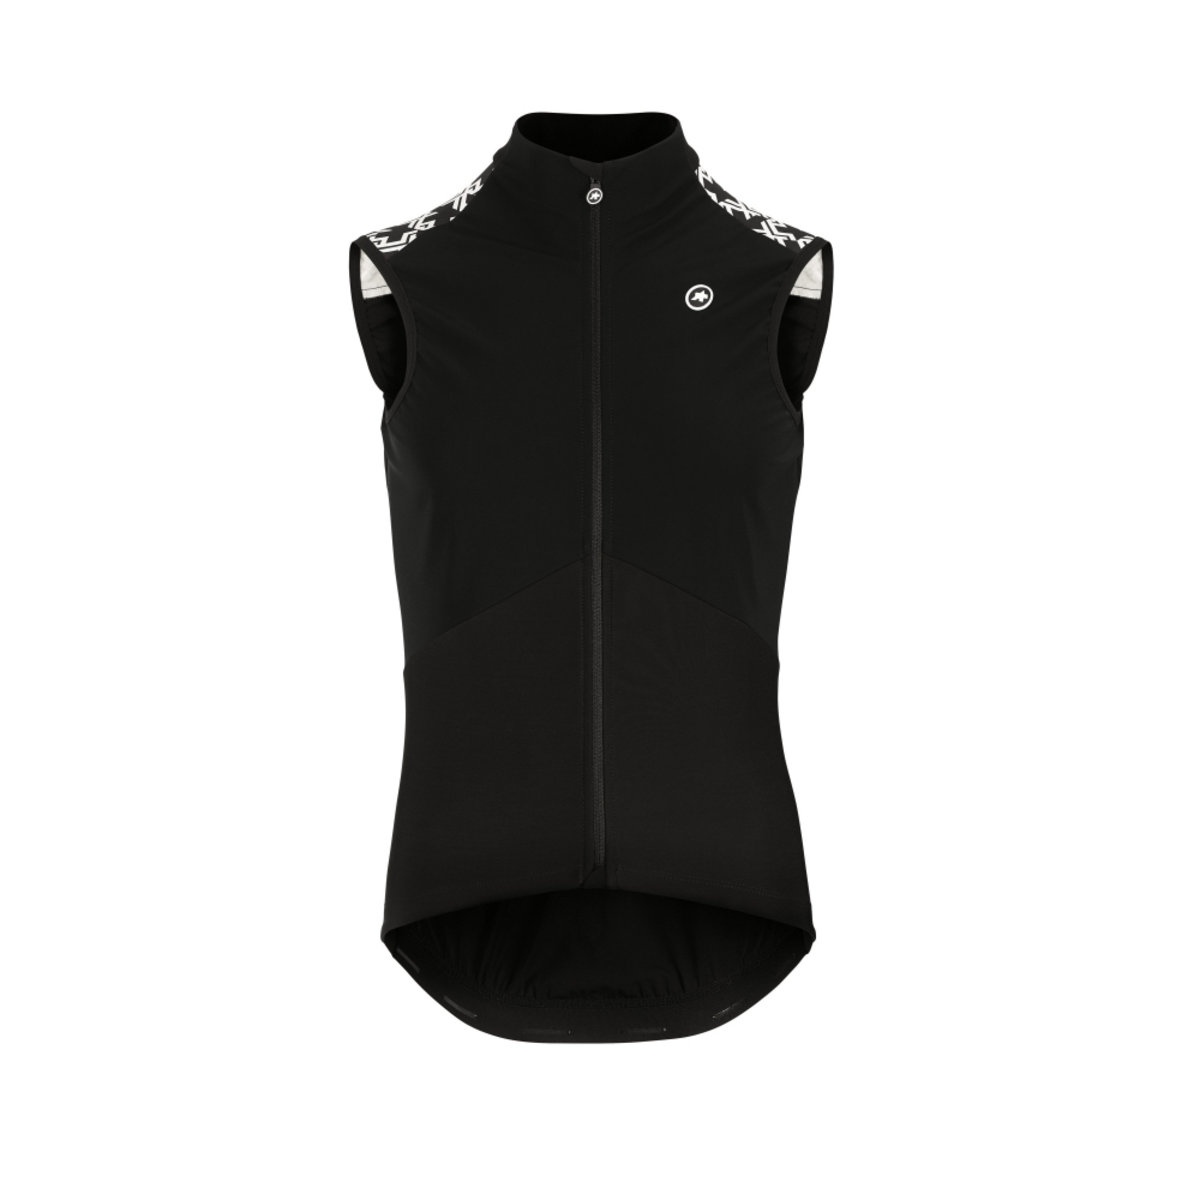 Жилетка ASSOS Mille GT Spring Fall Airblock Vest Black Series, мужская, черная с белым, XLG